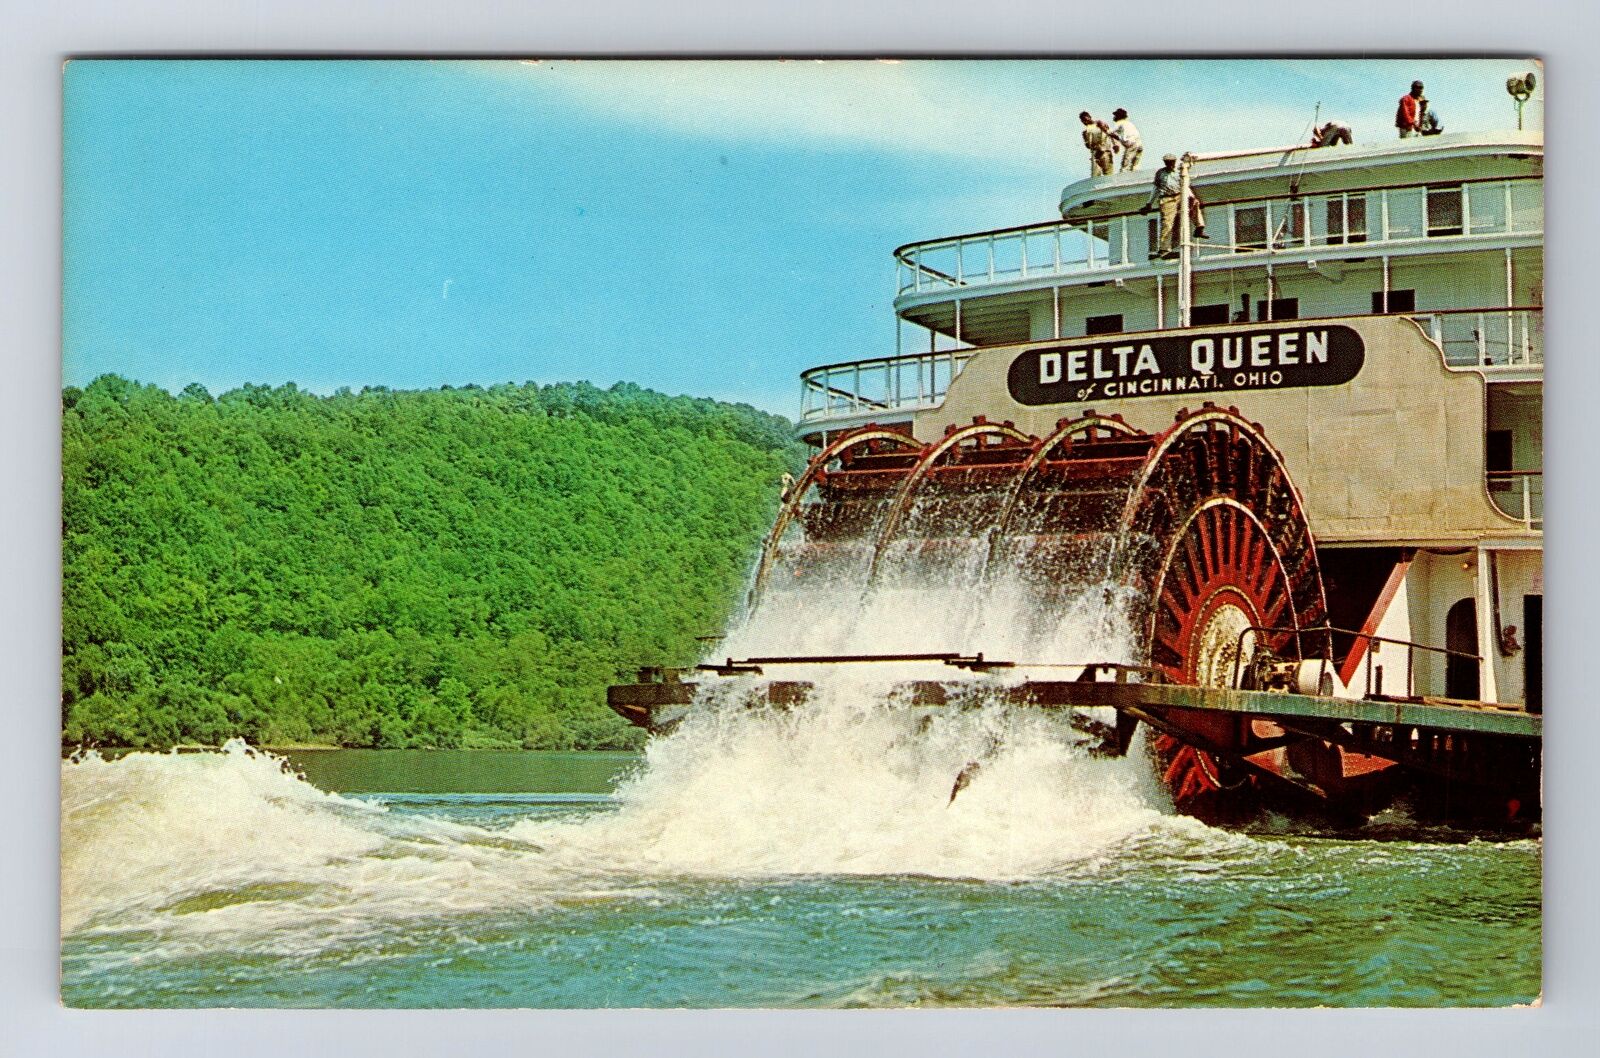 SS Delta Queen Stirring Up Big Wave In River, Antique, Vintage Souvenir Postcard